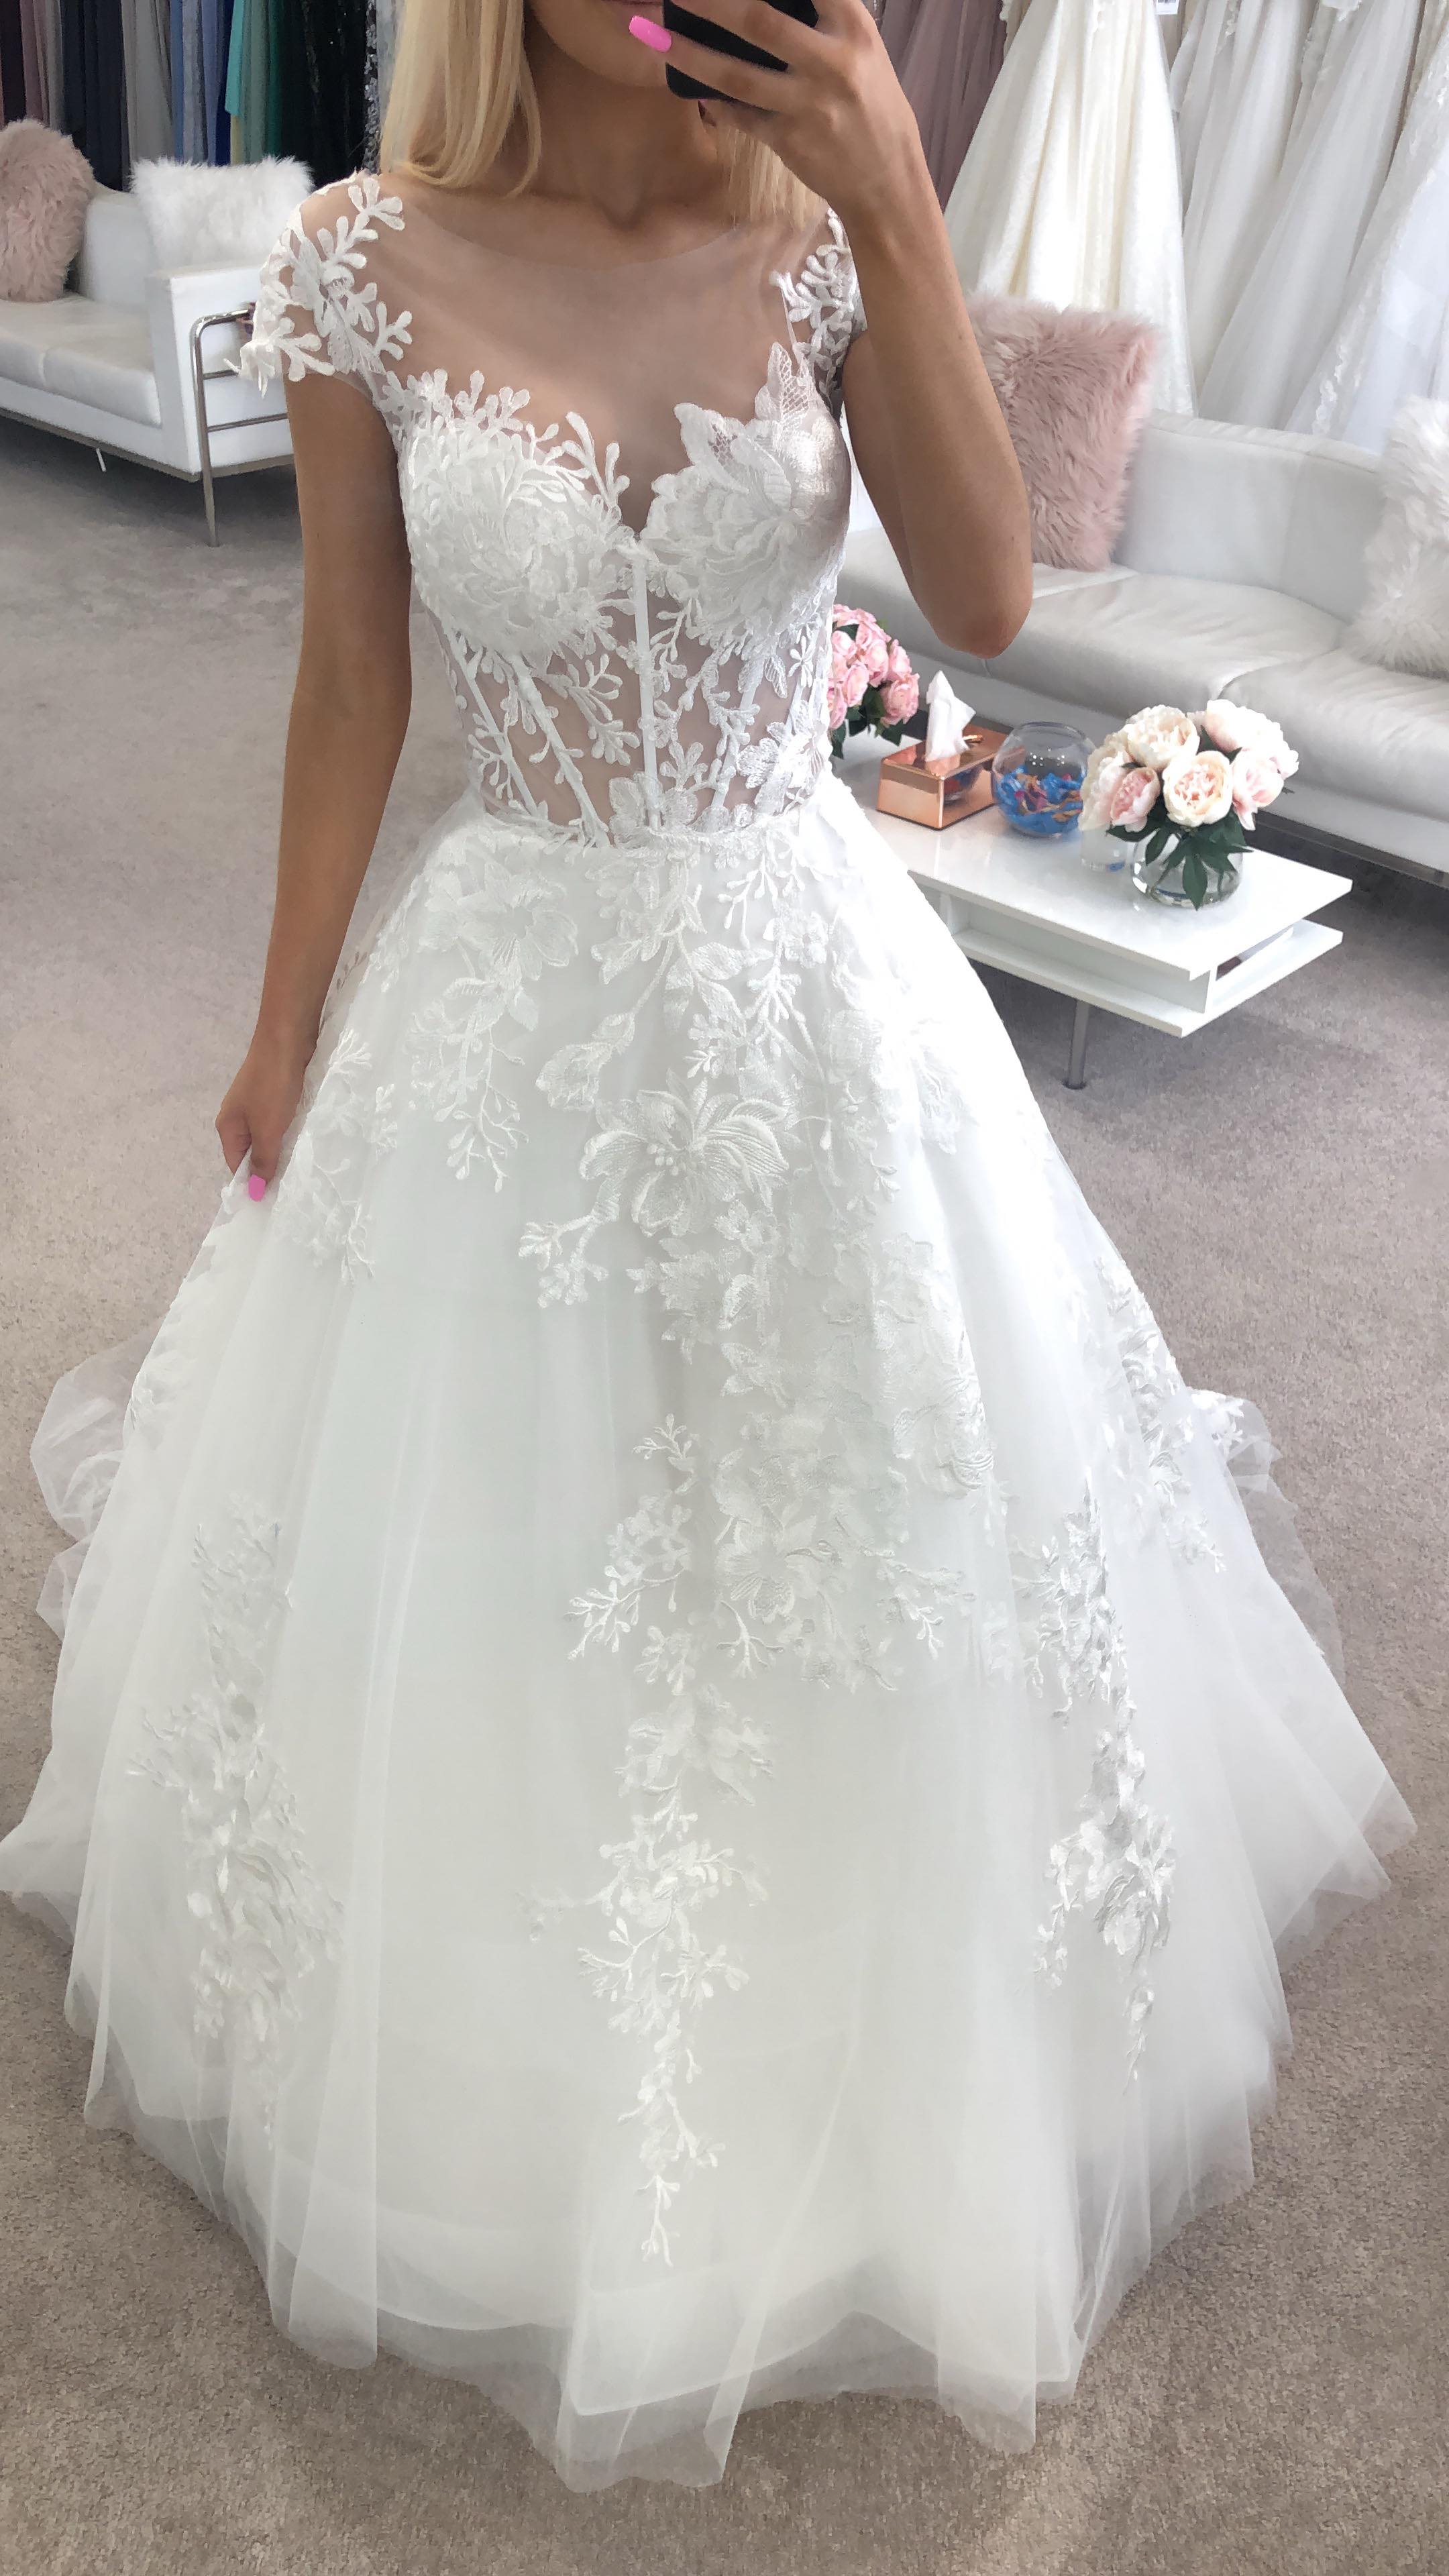  Lebanese Wedding Dresses